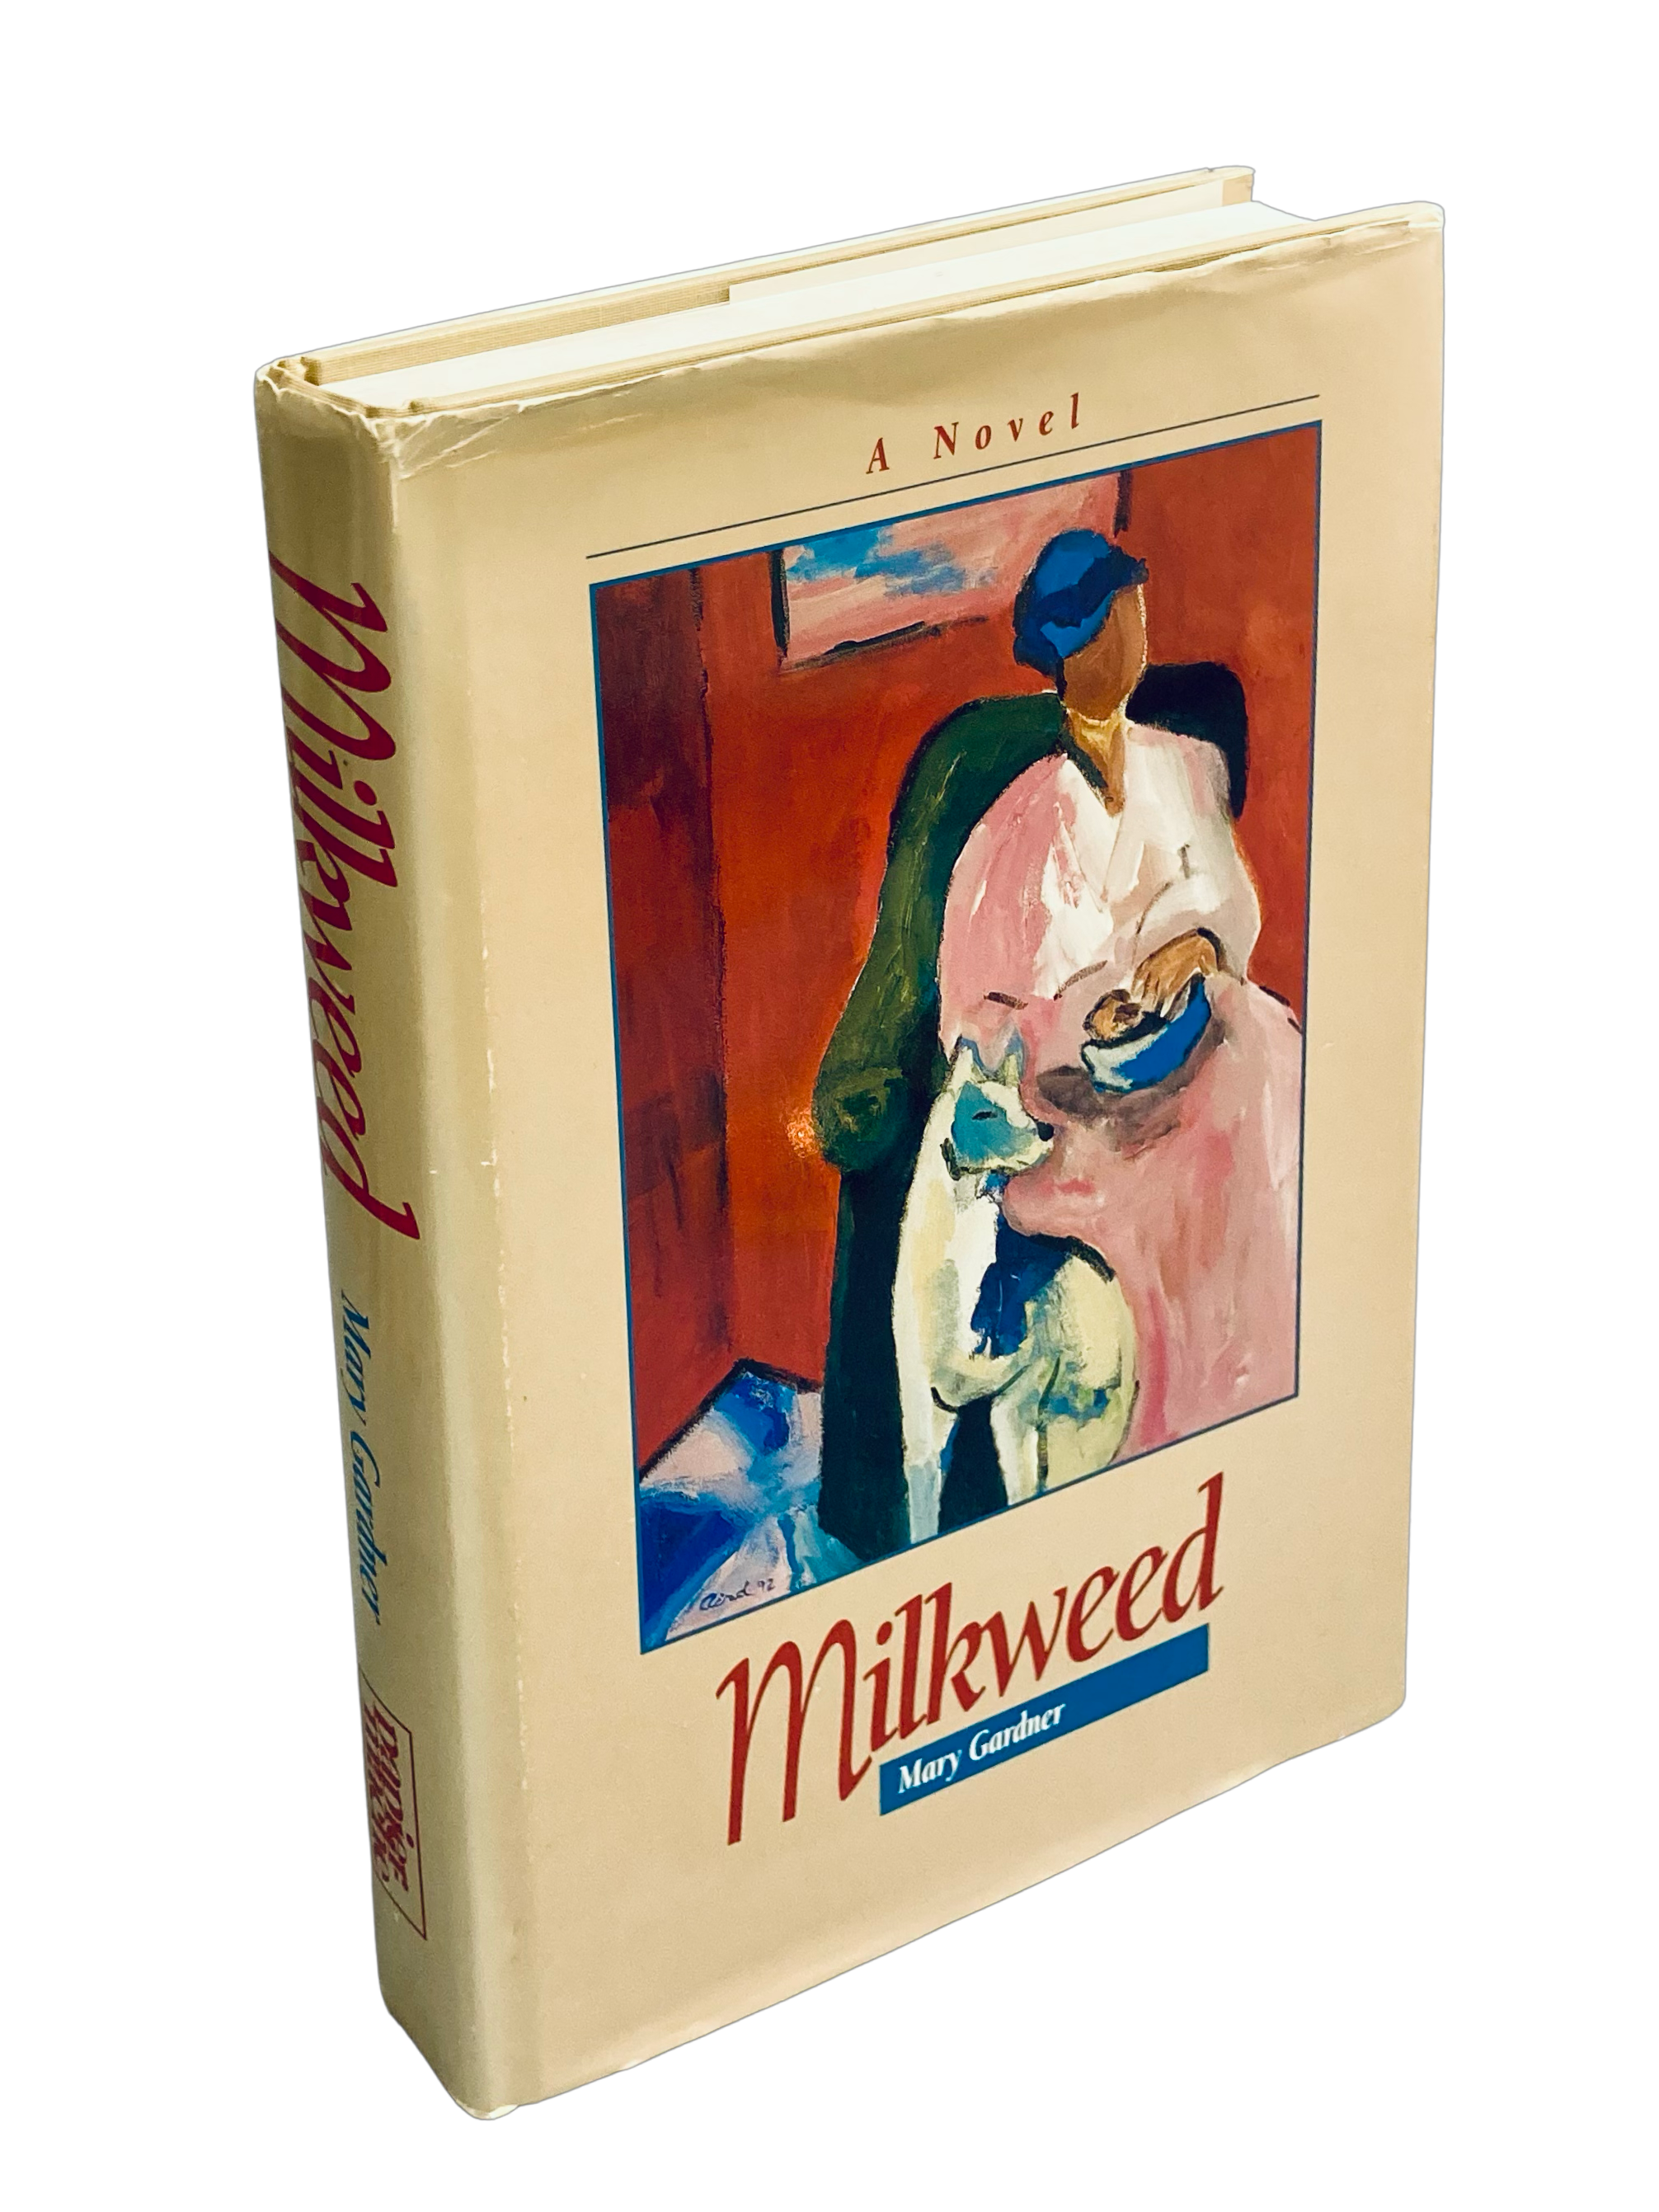 Milkweed: A novel